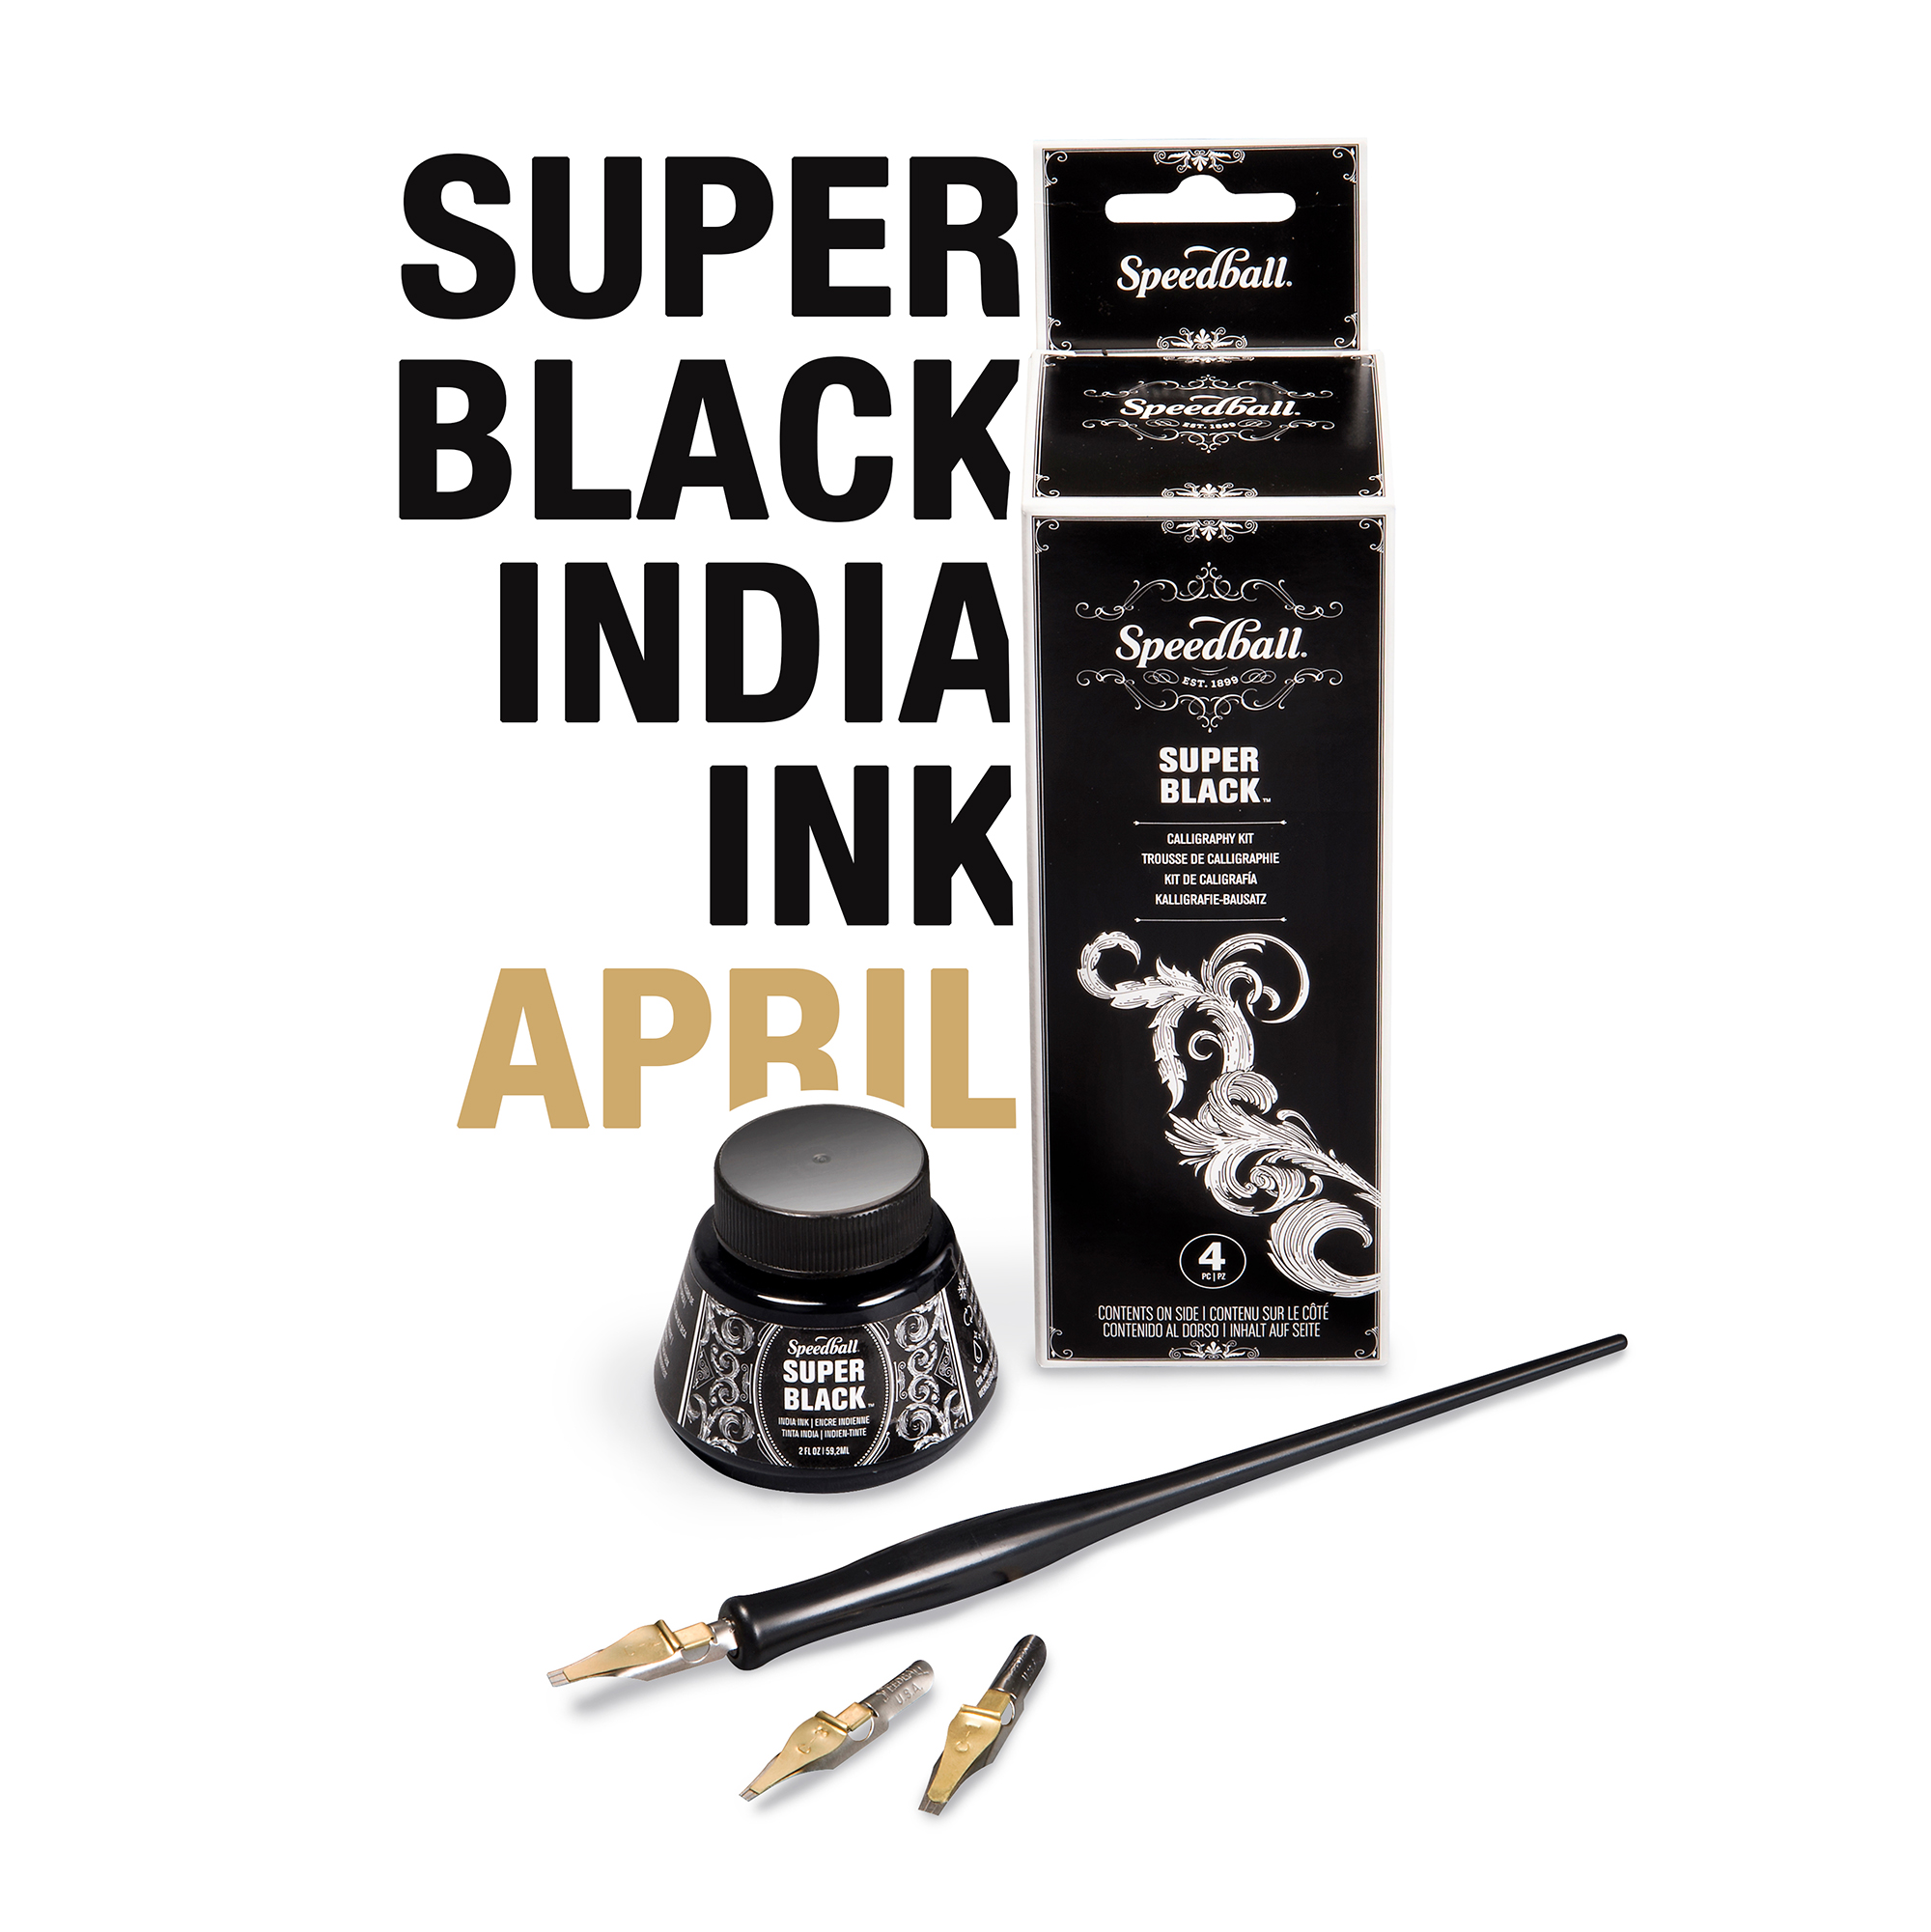 Super Black India Ink April - Speedball Art